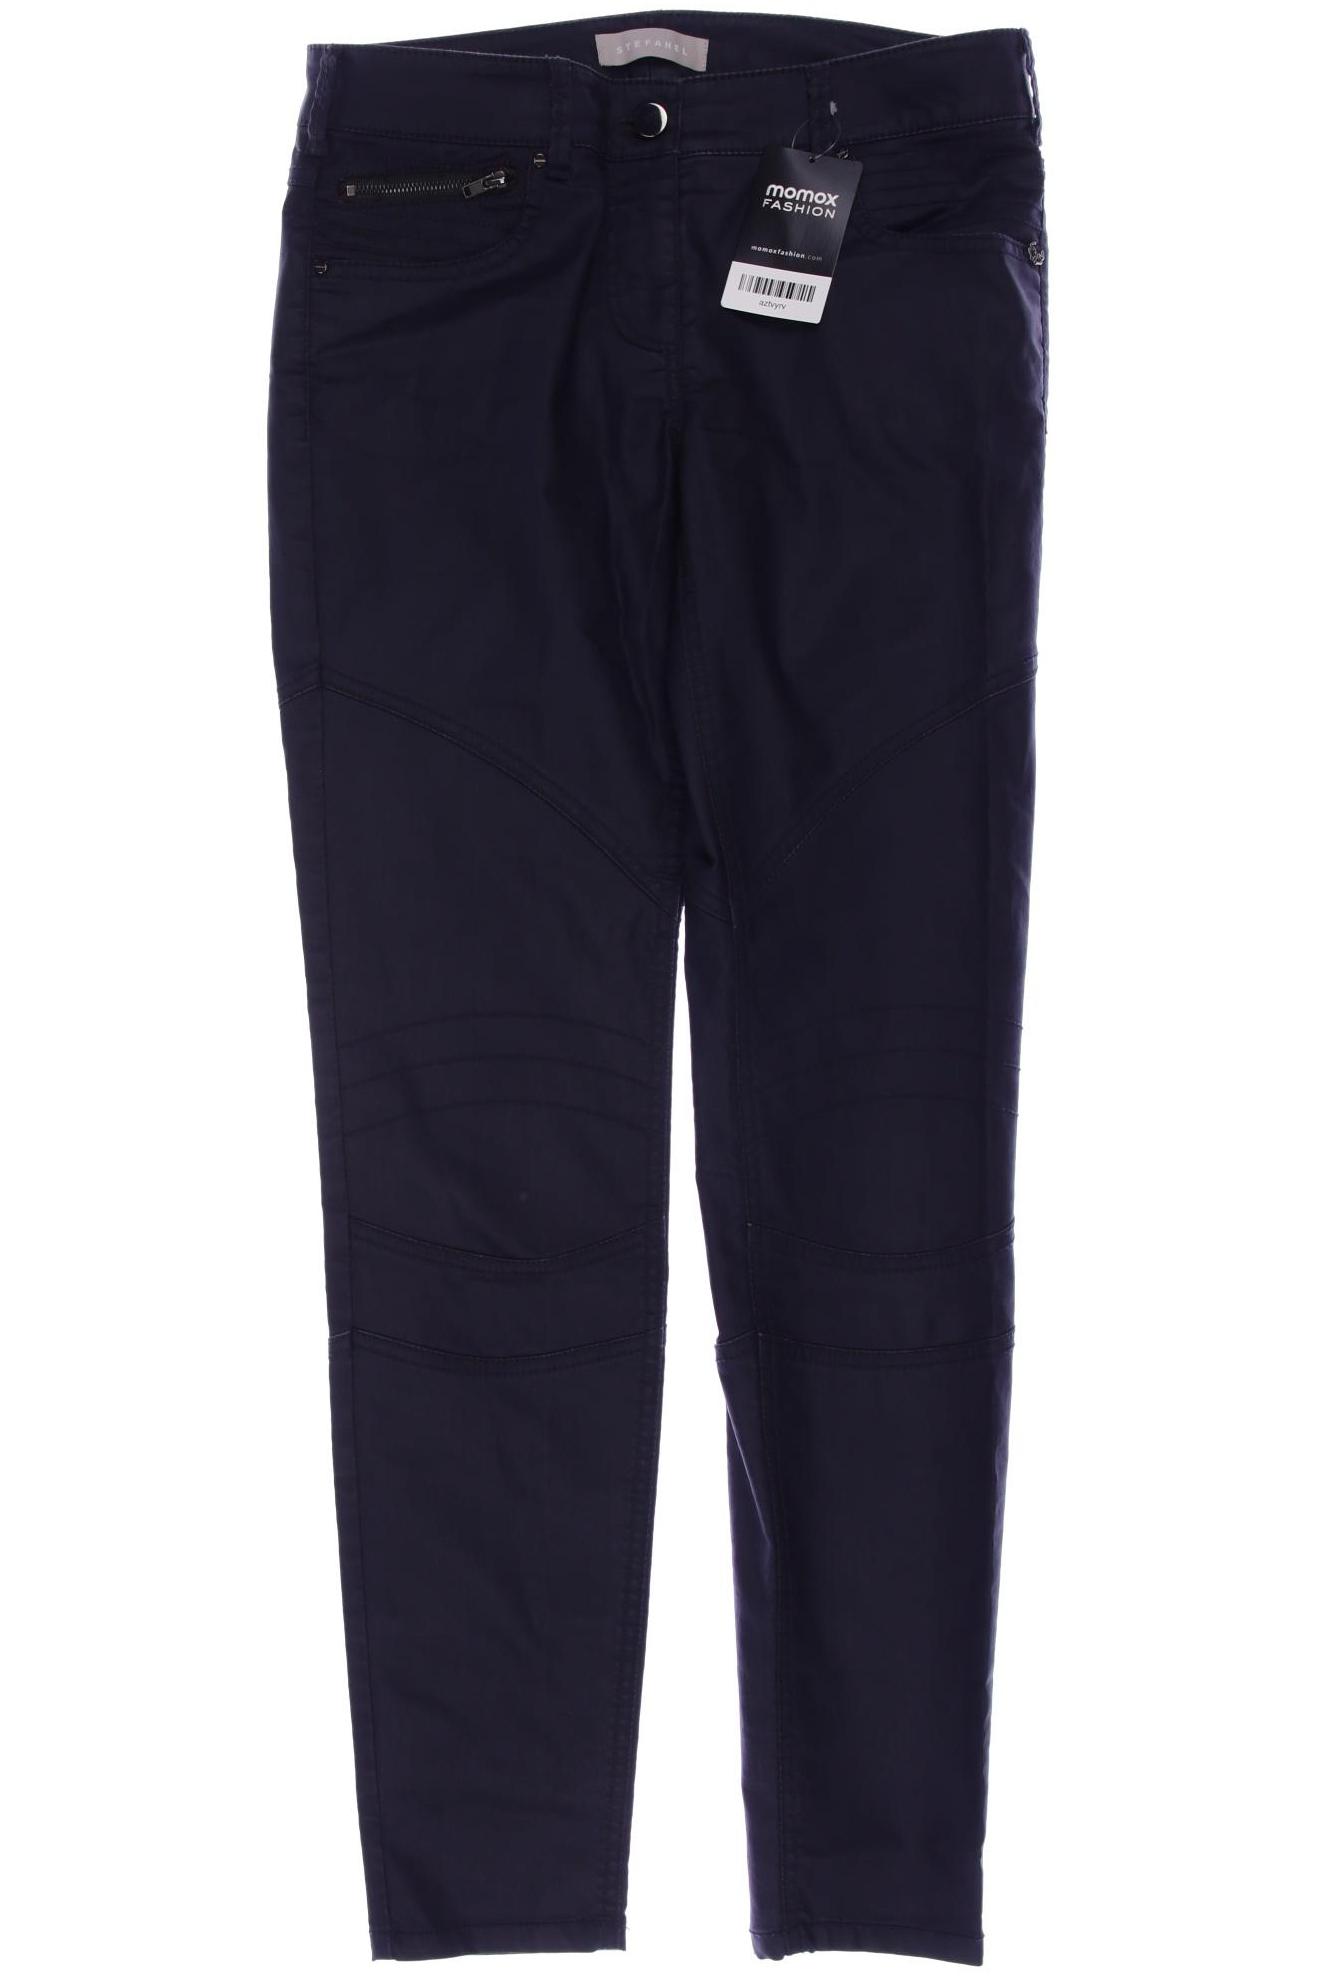 Stefanel Damen Jeans, marineblau, Gr. 36 von Stefanel